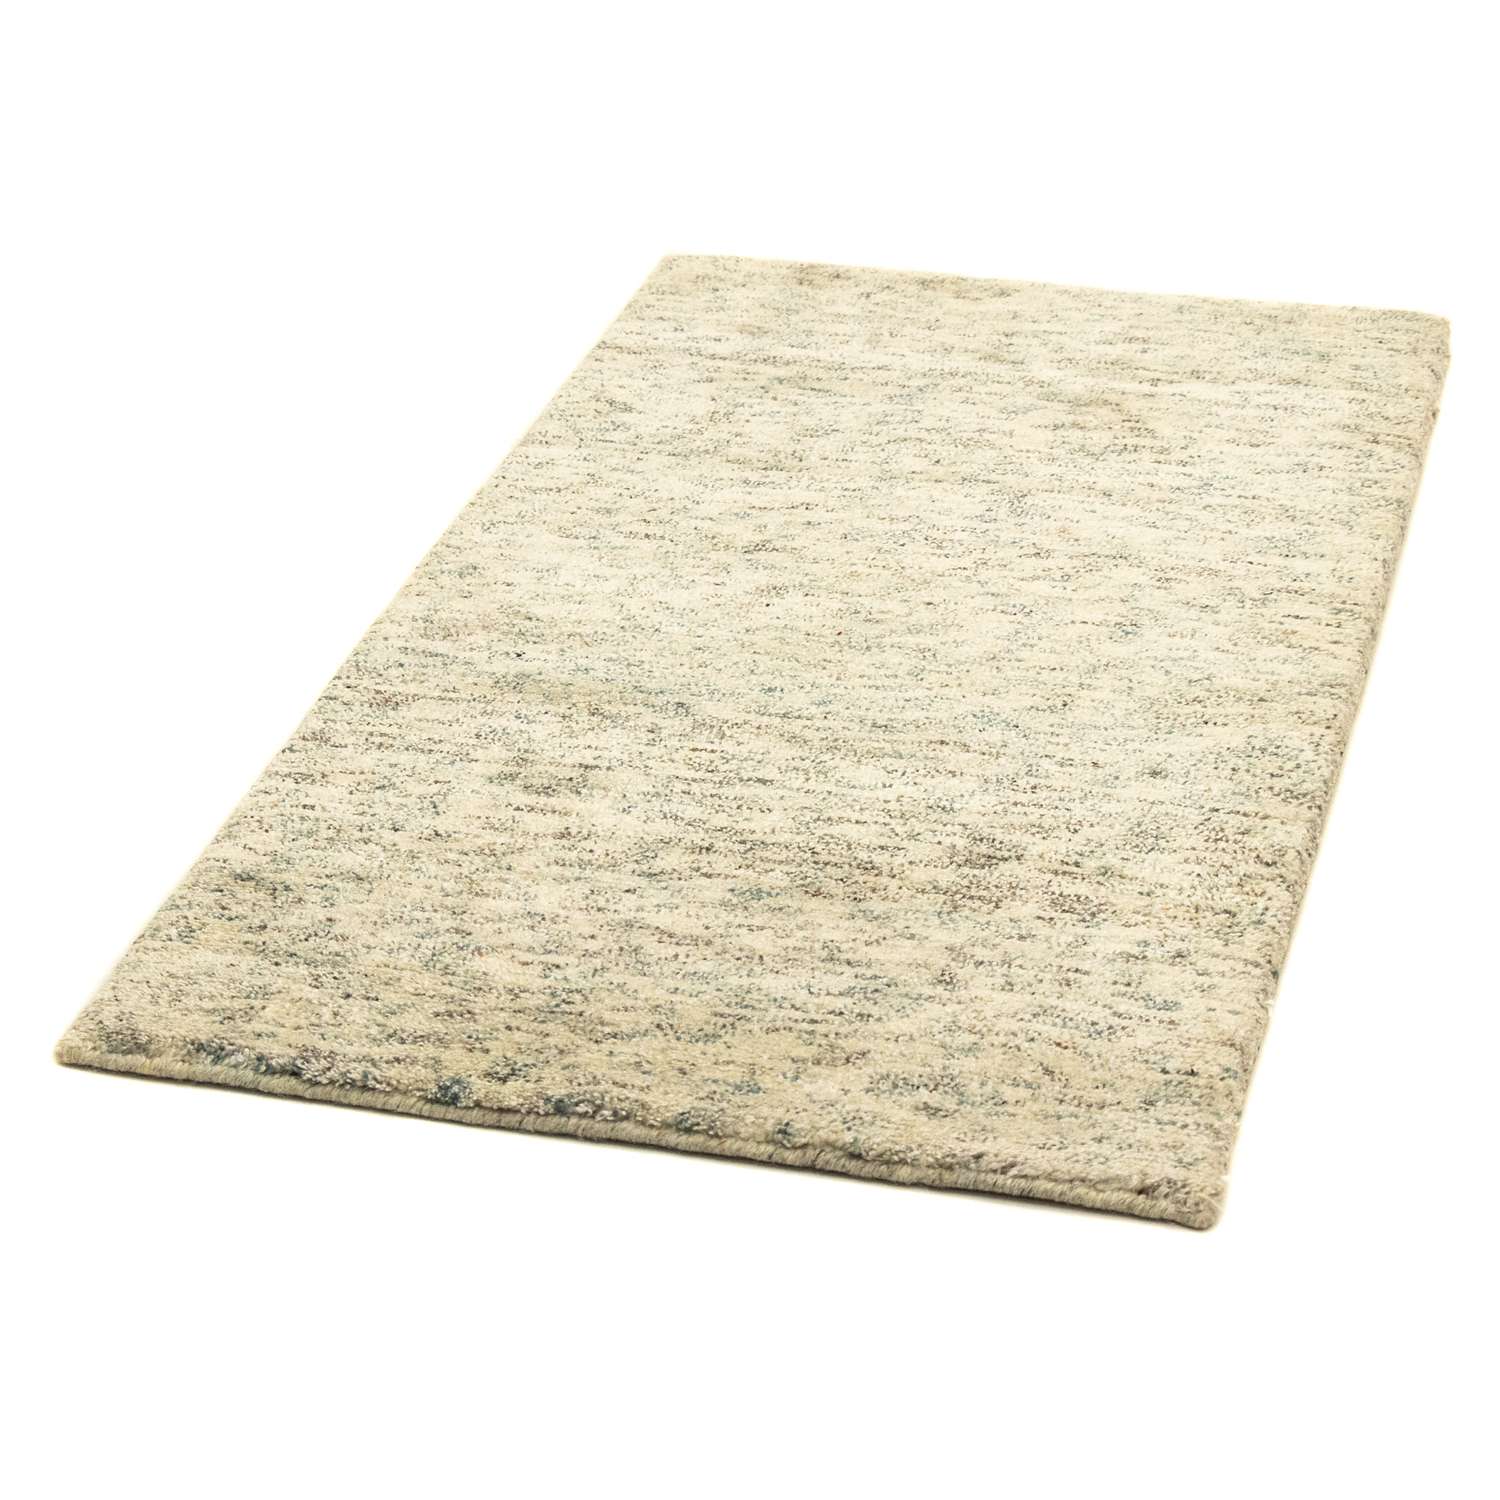 Nepal mattan - 141 x 73 cm - grått